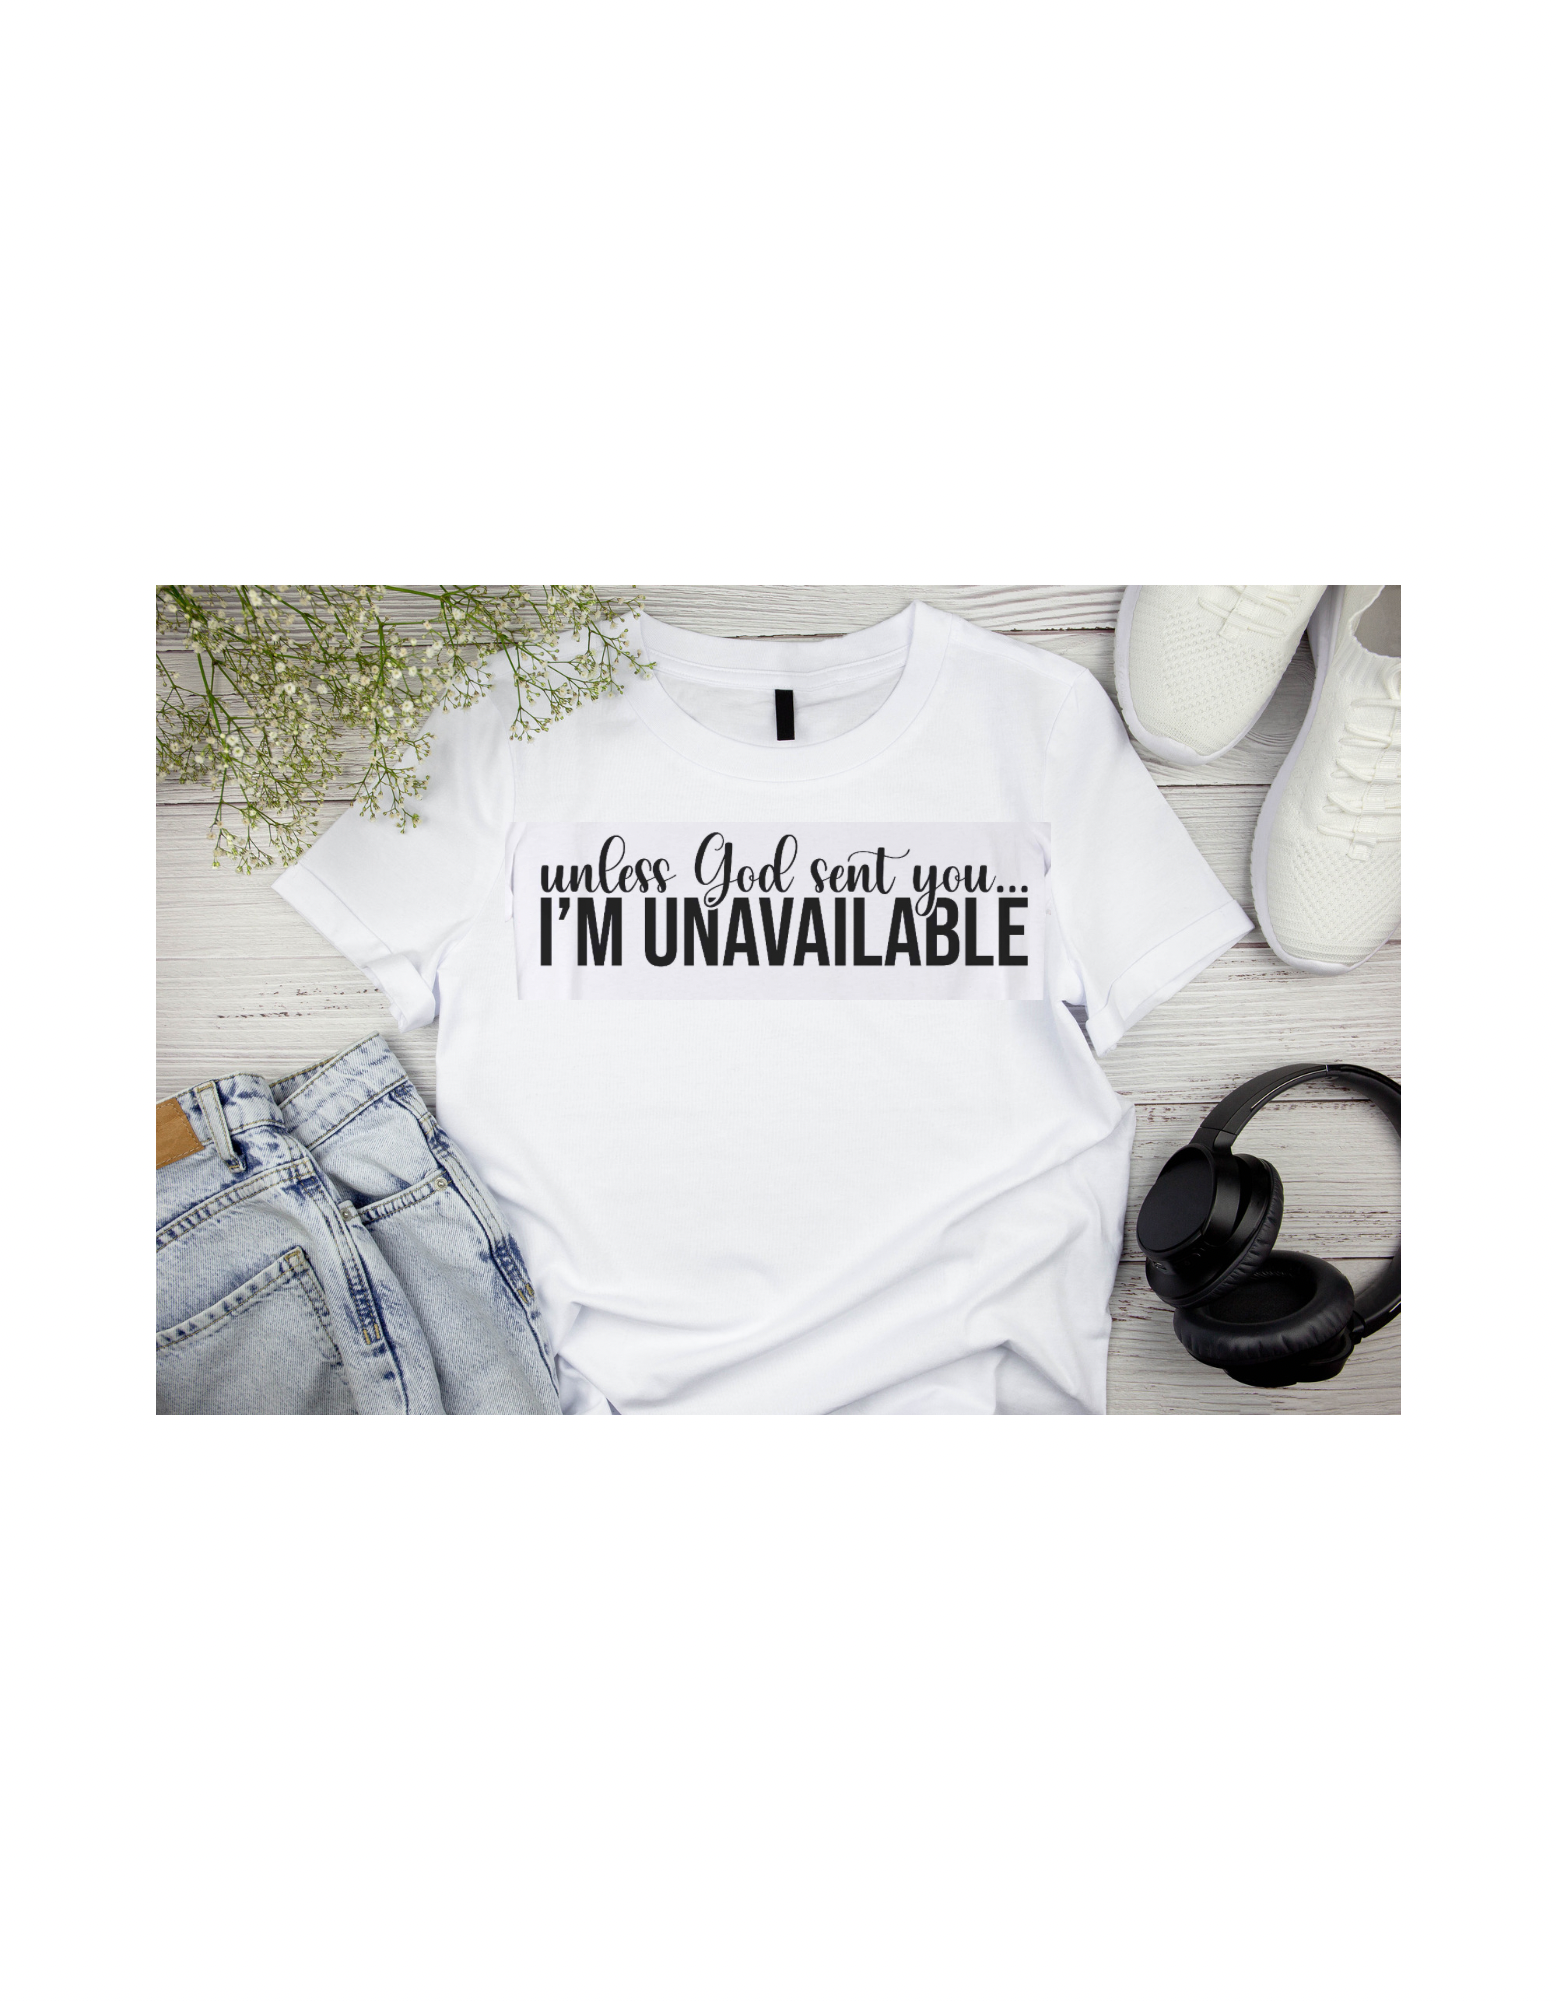 I am Unavailable - Jesus